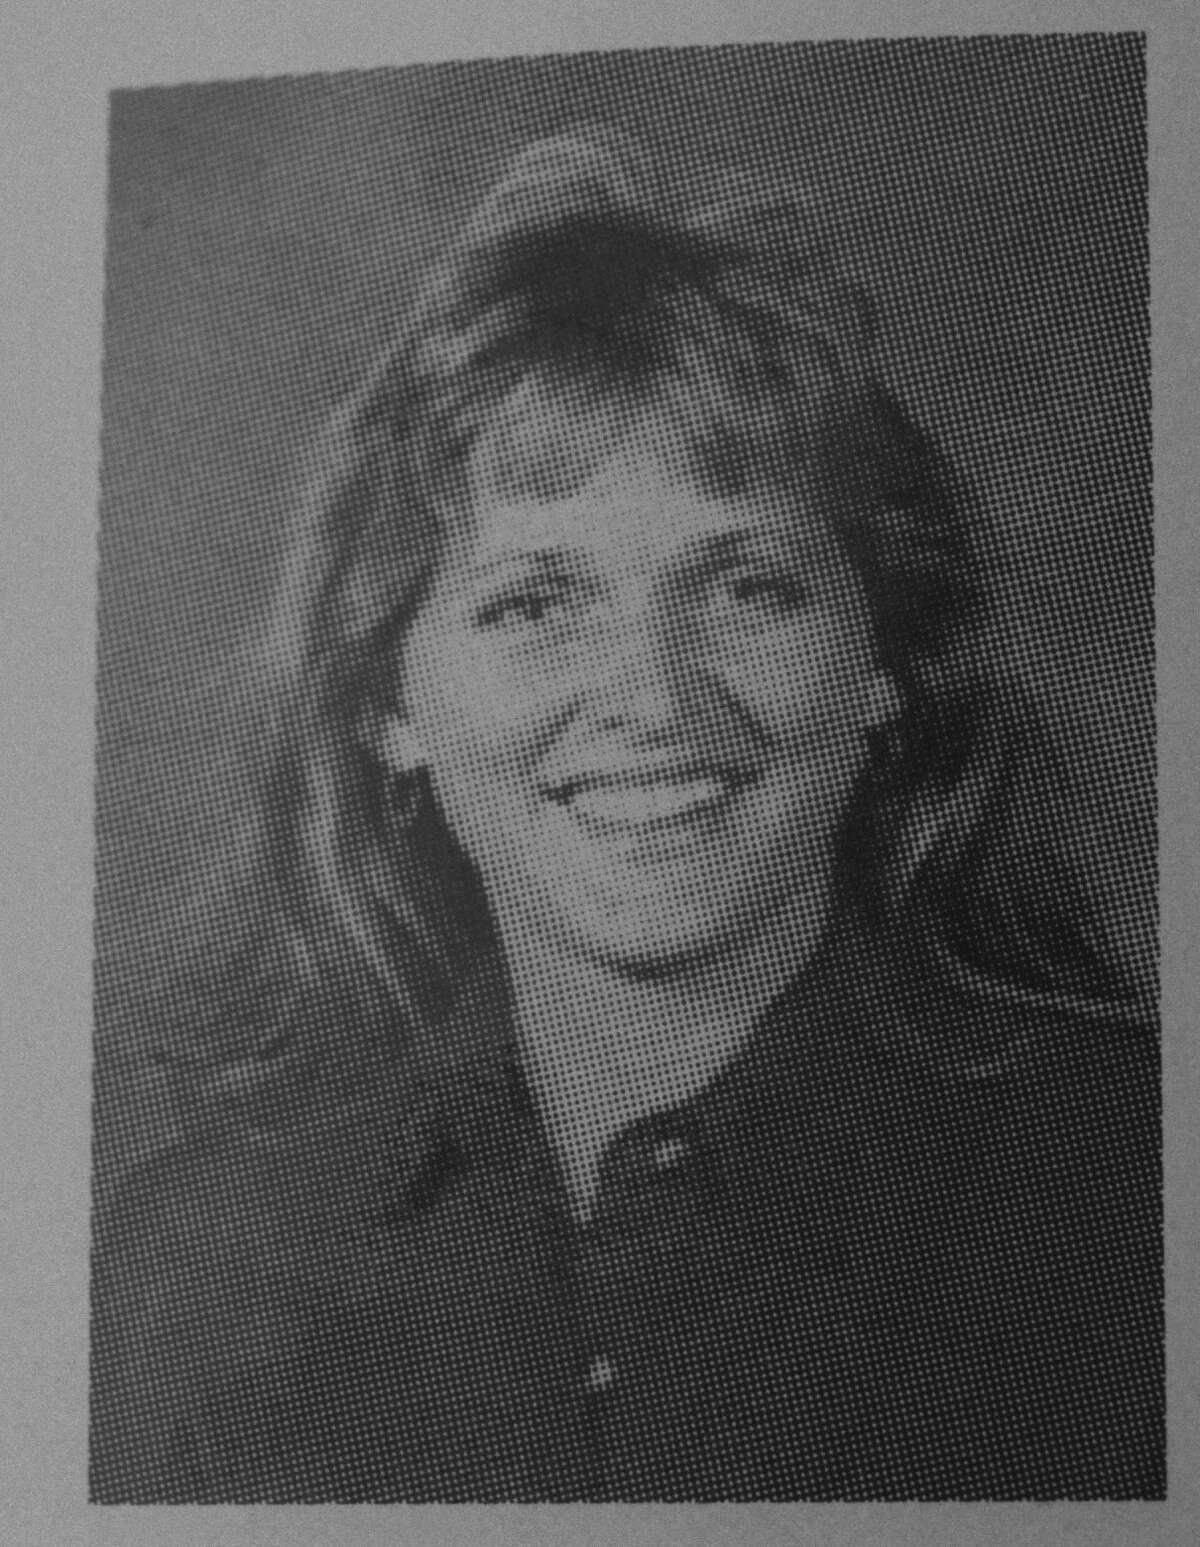 Yearbook photo of Belinda Temple, a teacher at Katy High School.